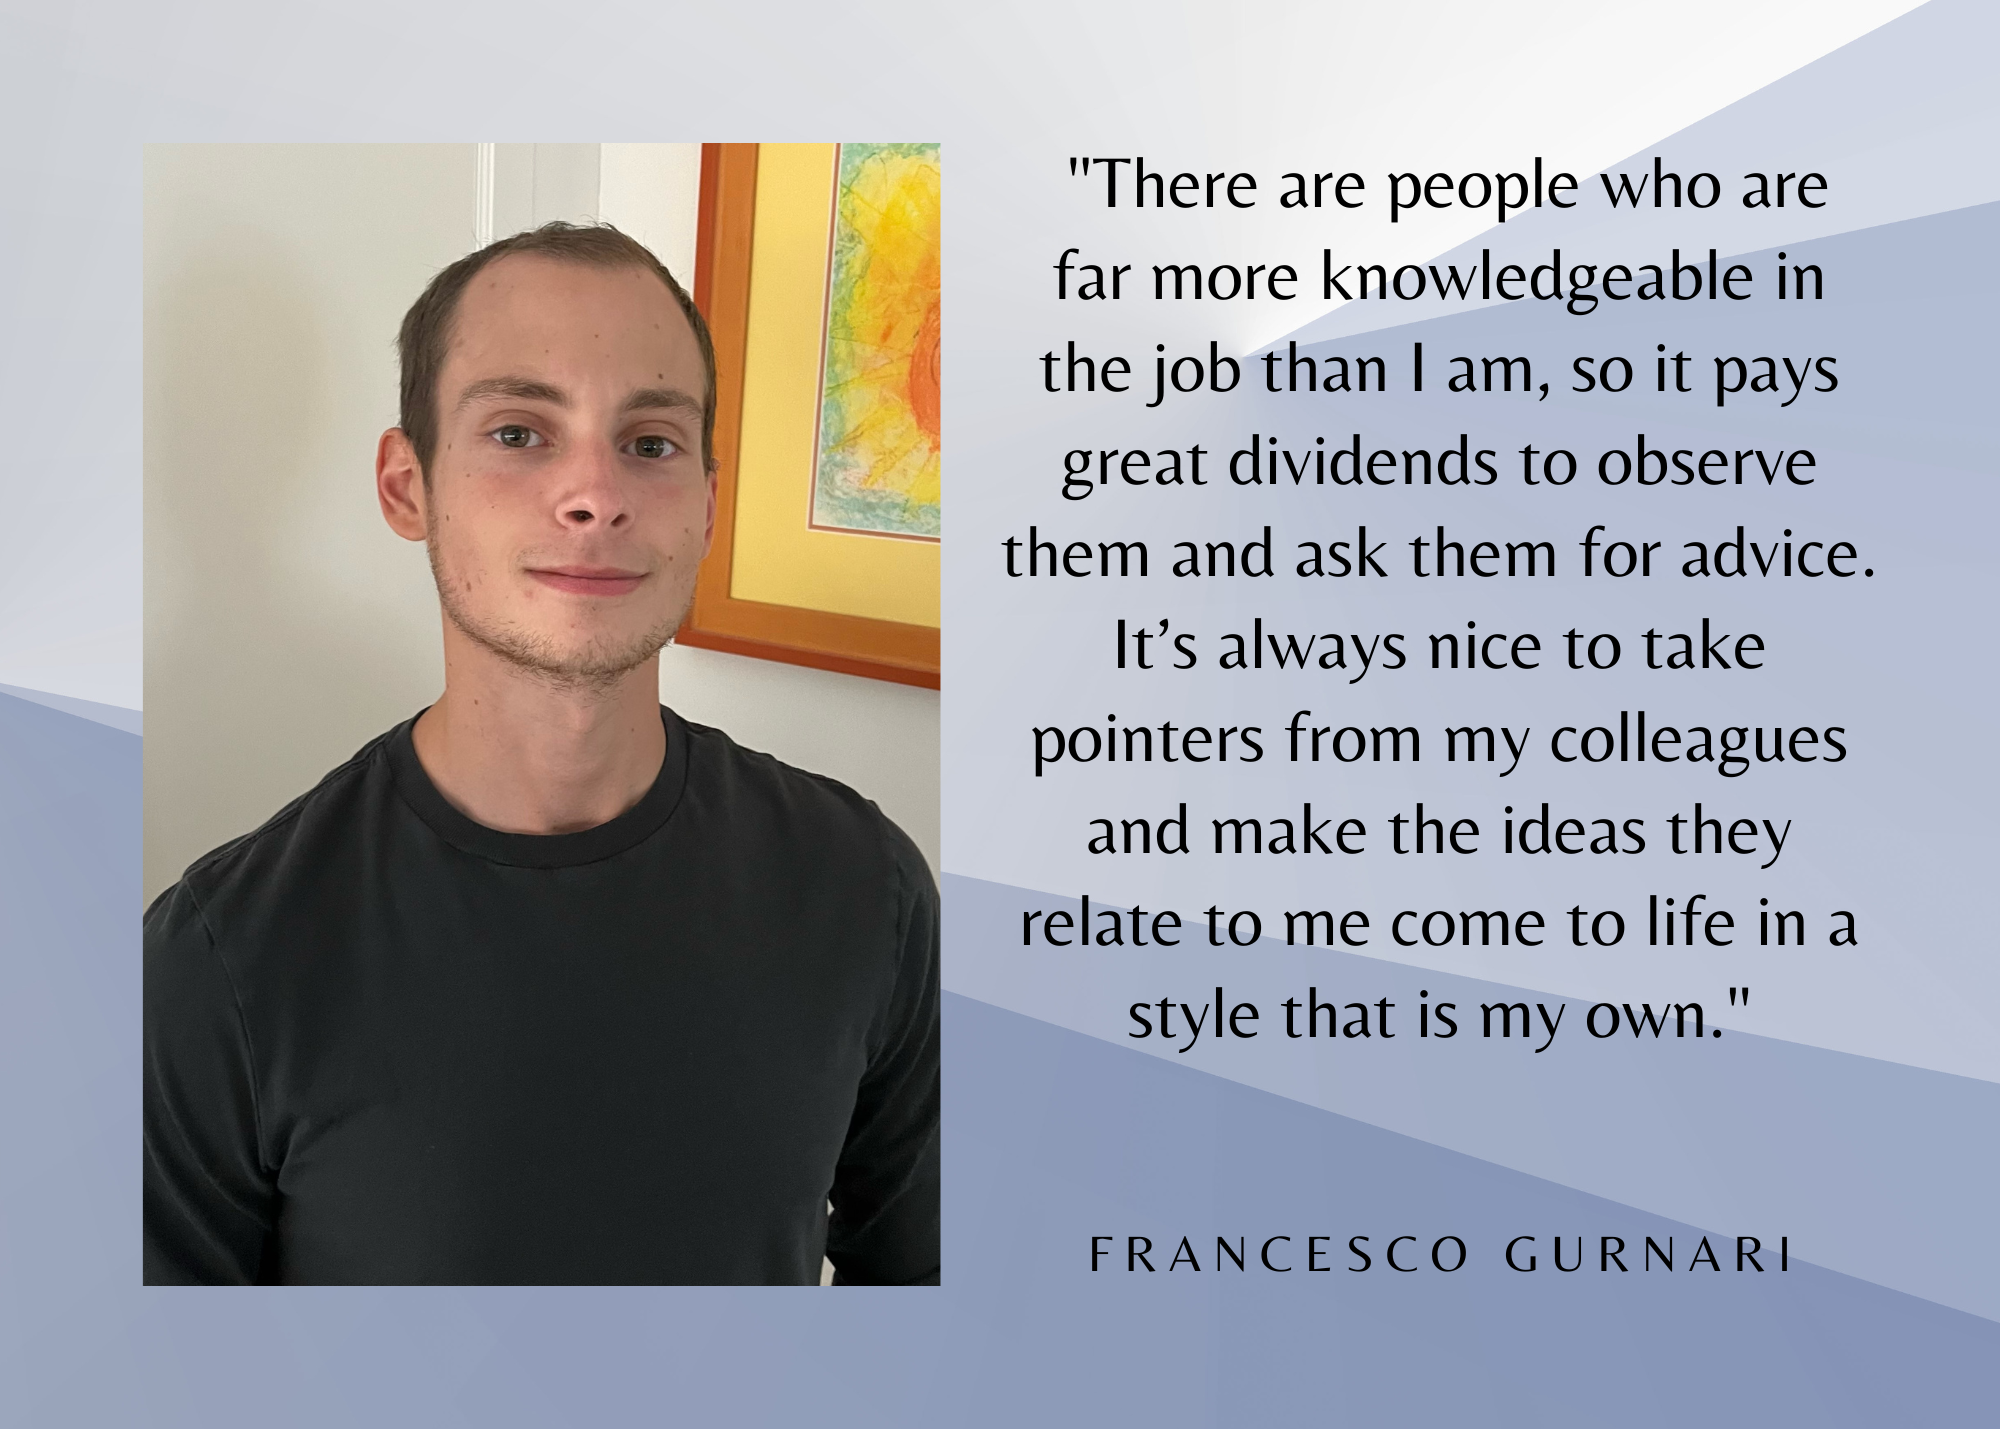 Francesco Gurnari Launches Website To Share His Ideas